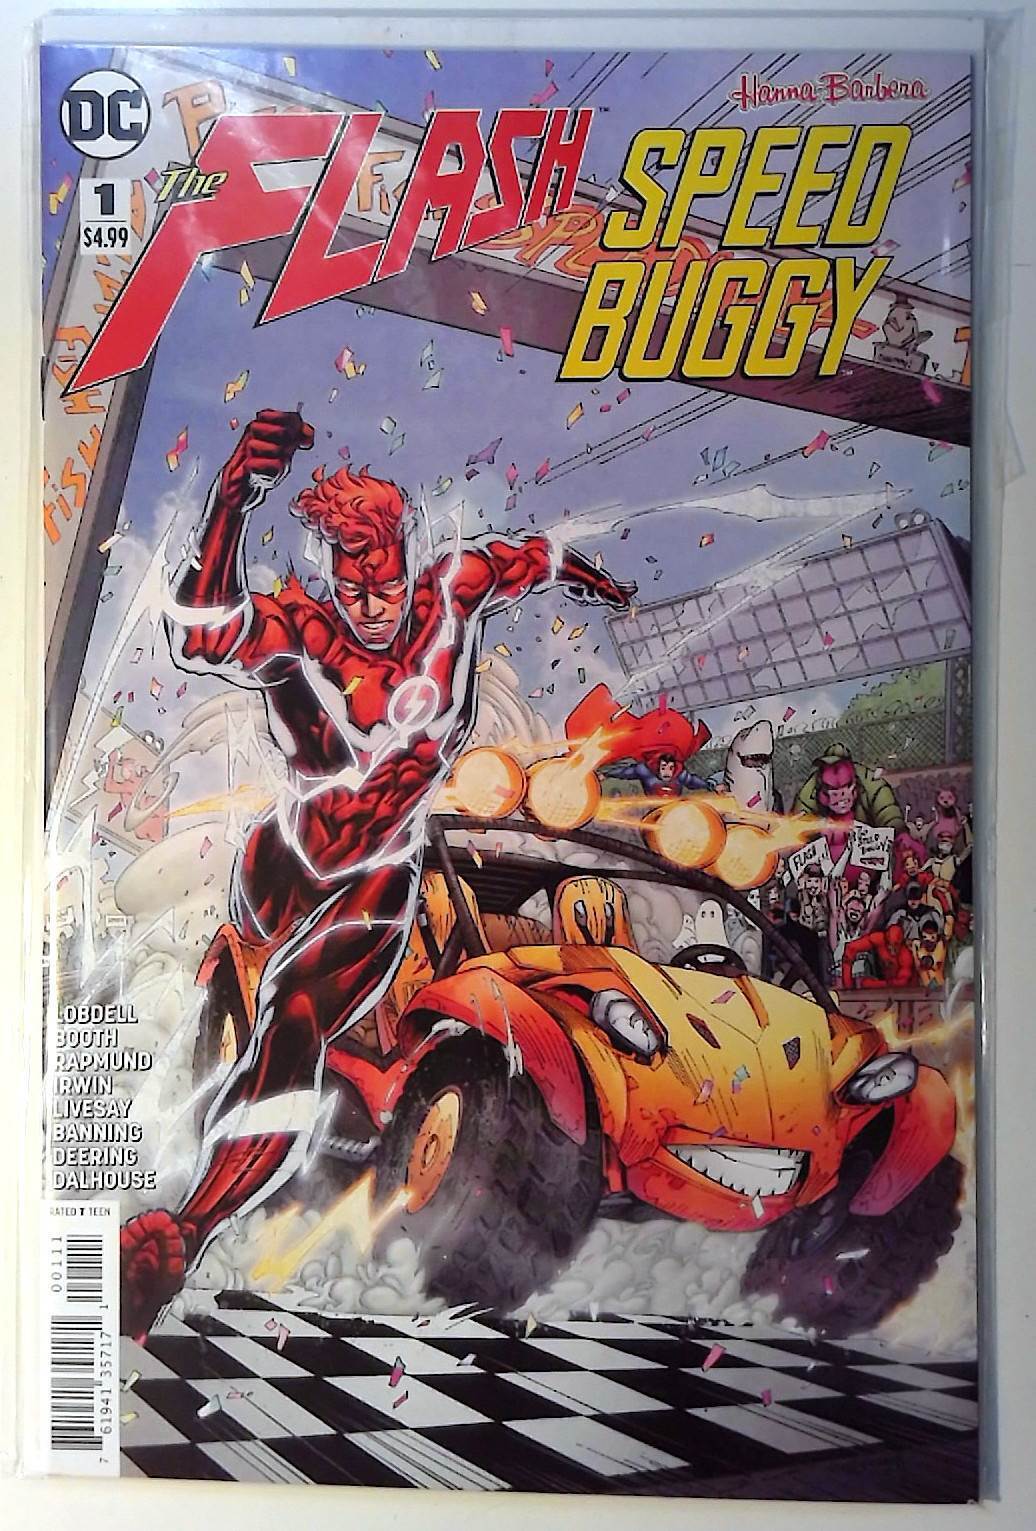 Flash/Speed Buggy Special #1 DC Comics (2018) Hanna Barbera 1st Print Comic Book